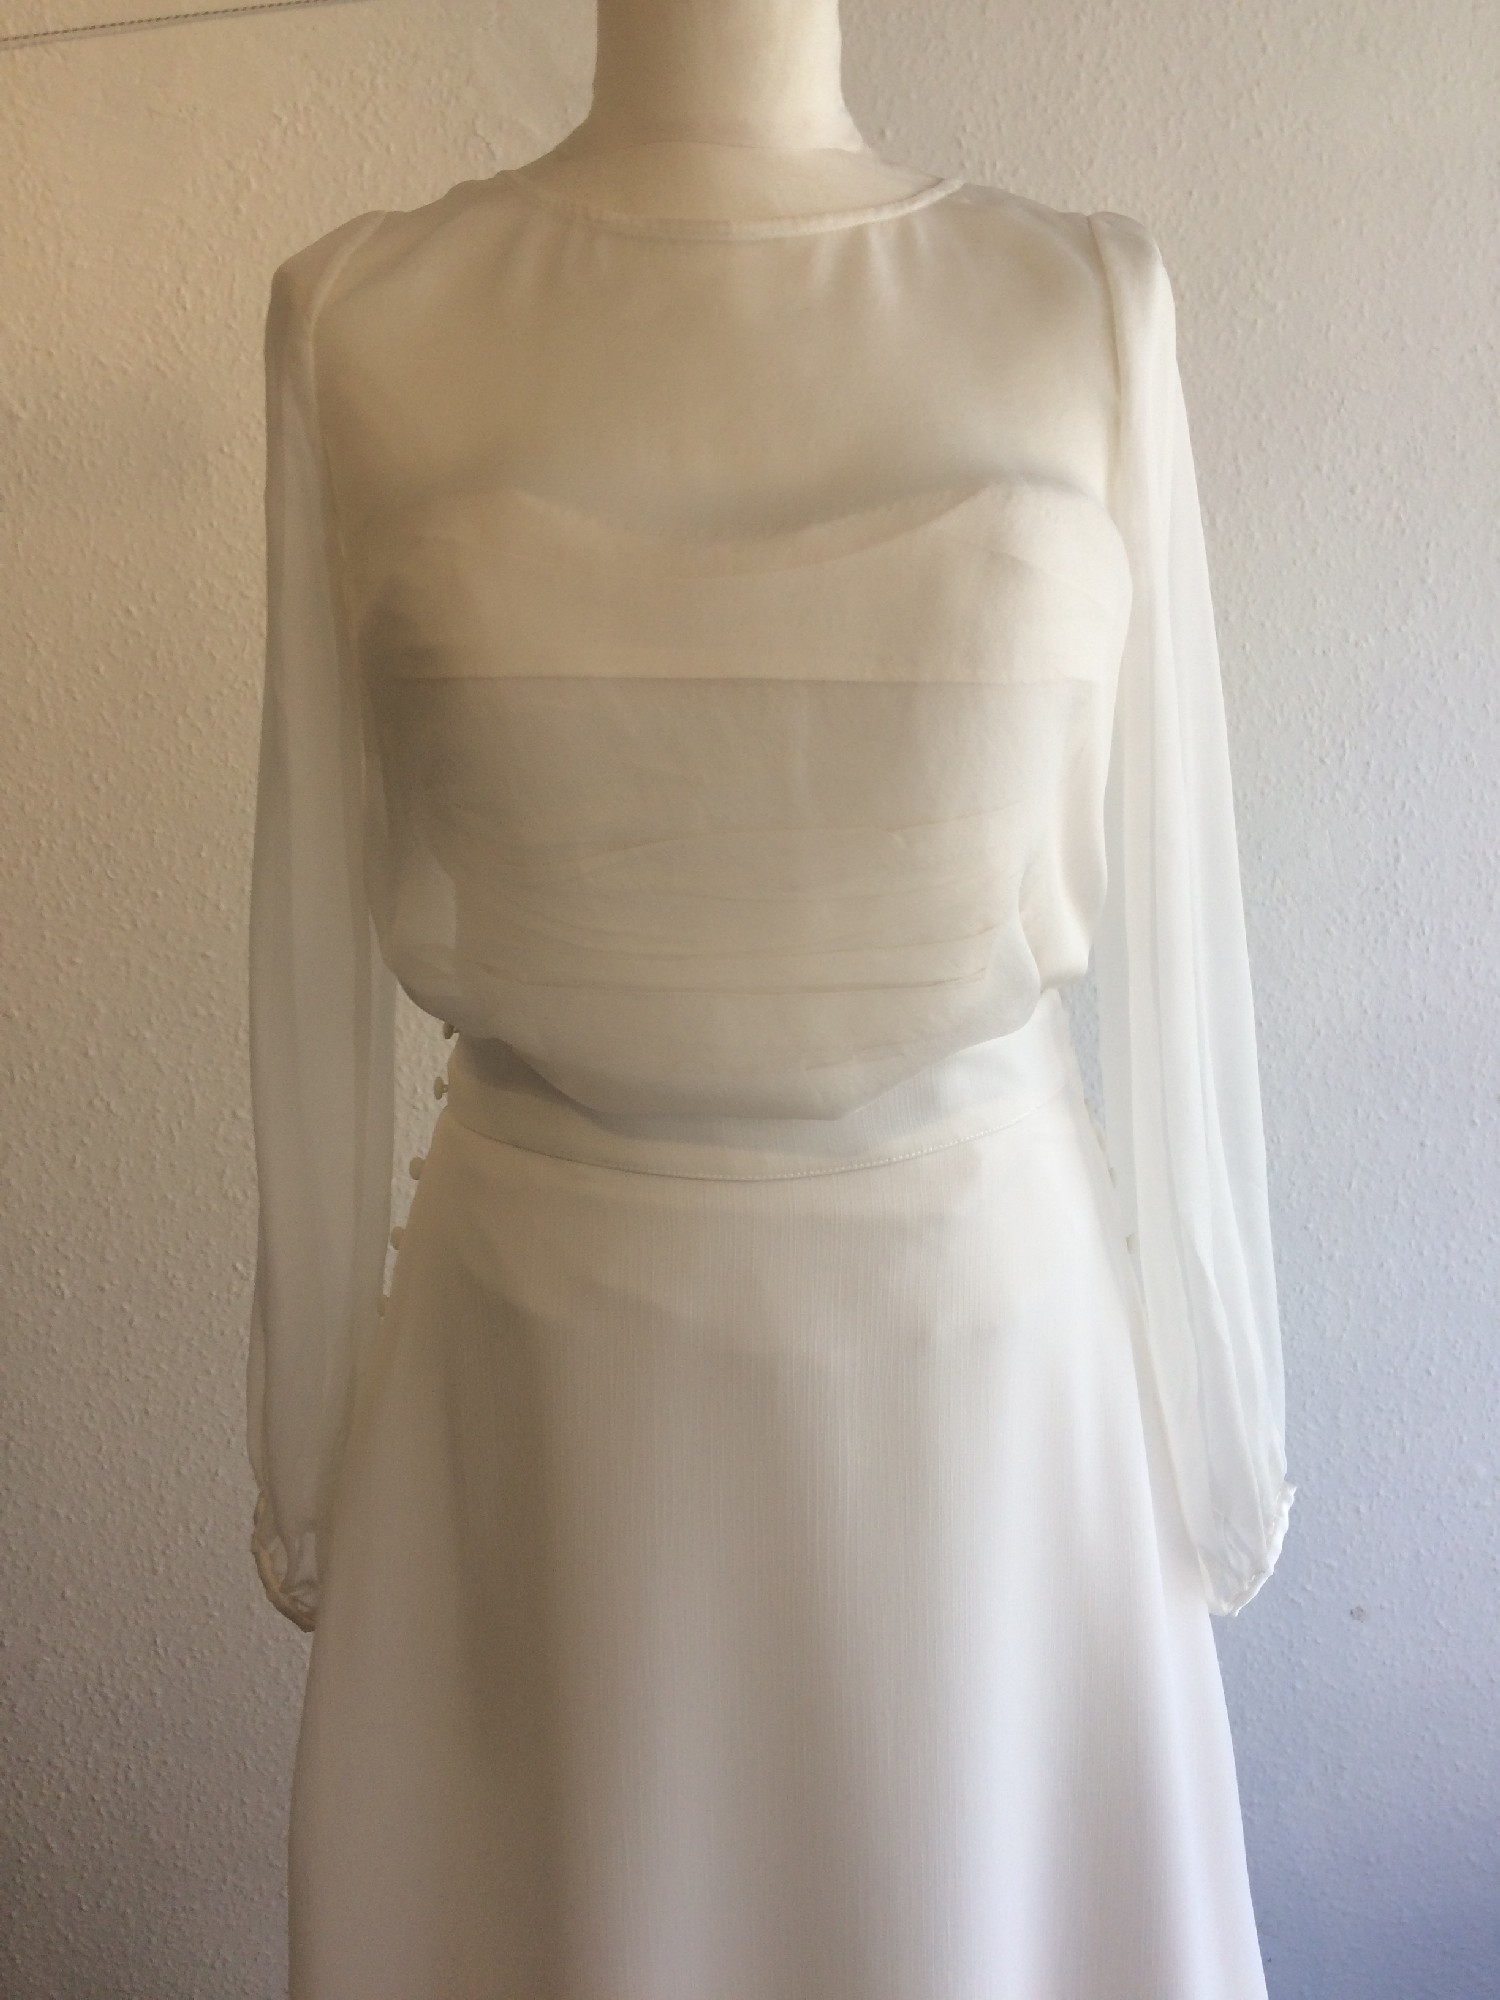 Ender Legard Custom Made Sample Wedding Dress Save 84% - Stillwhite